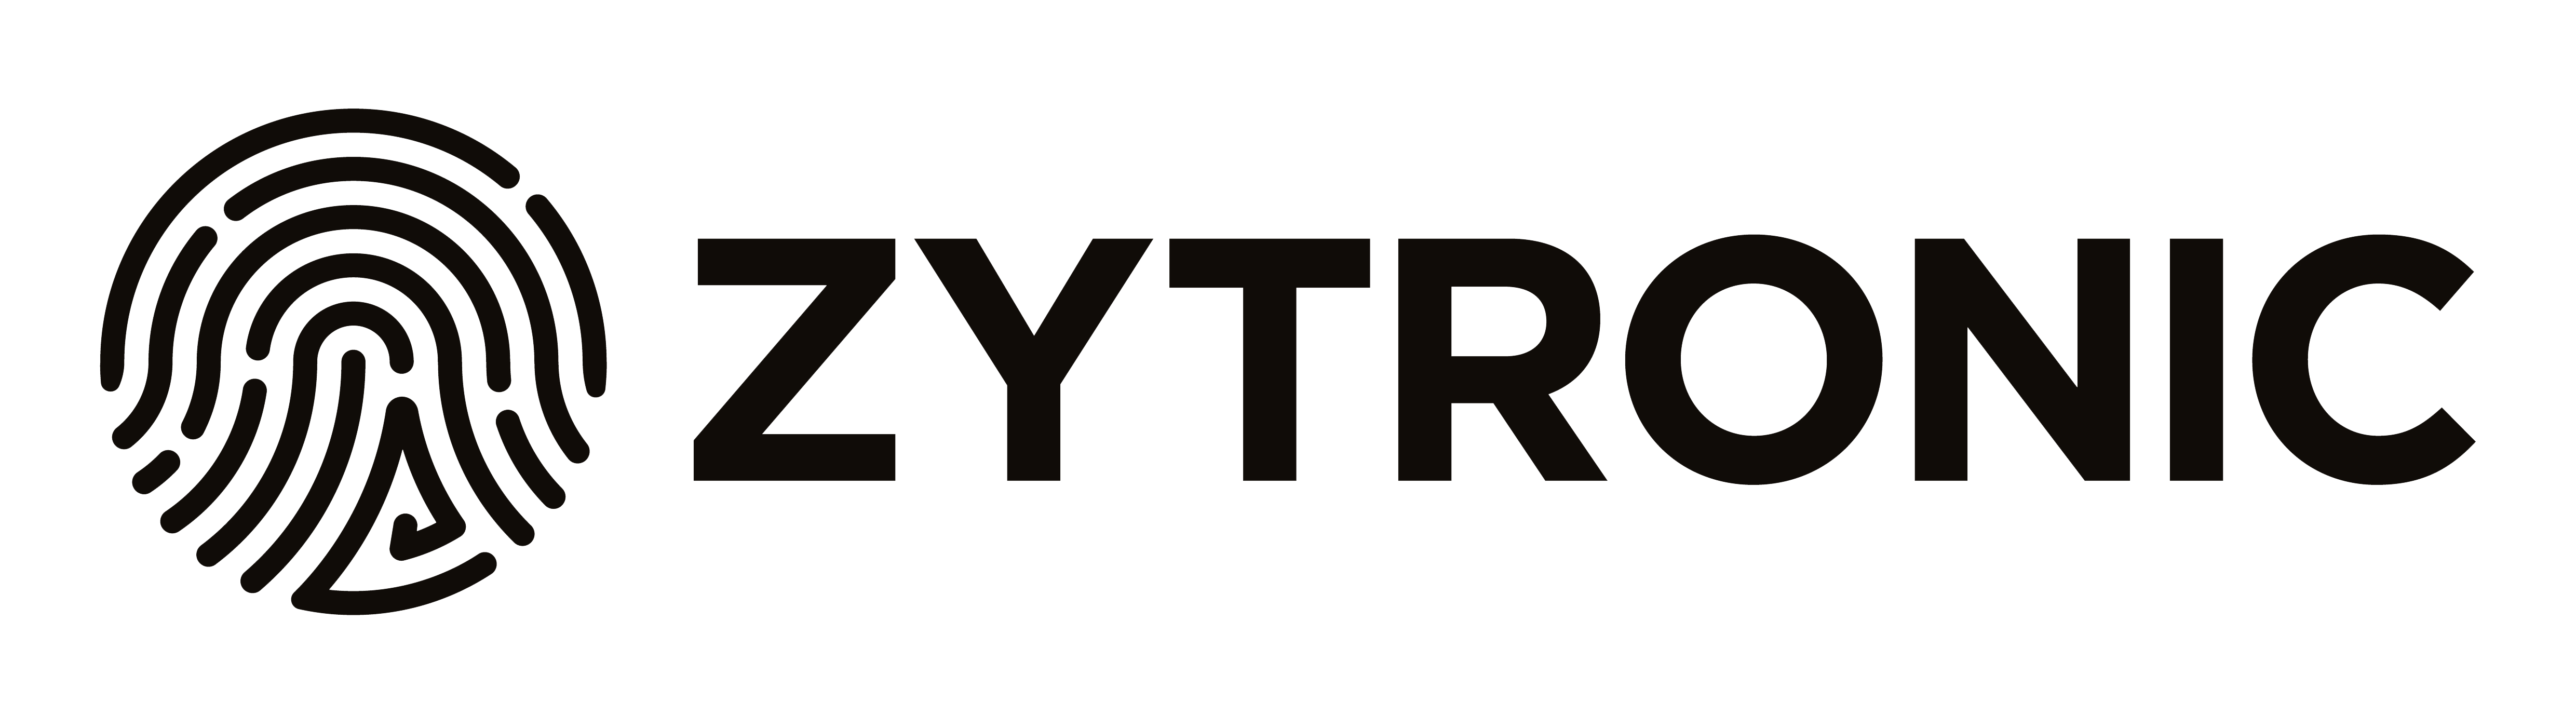 Zytronic Logo